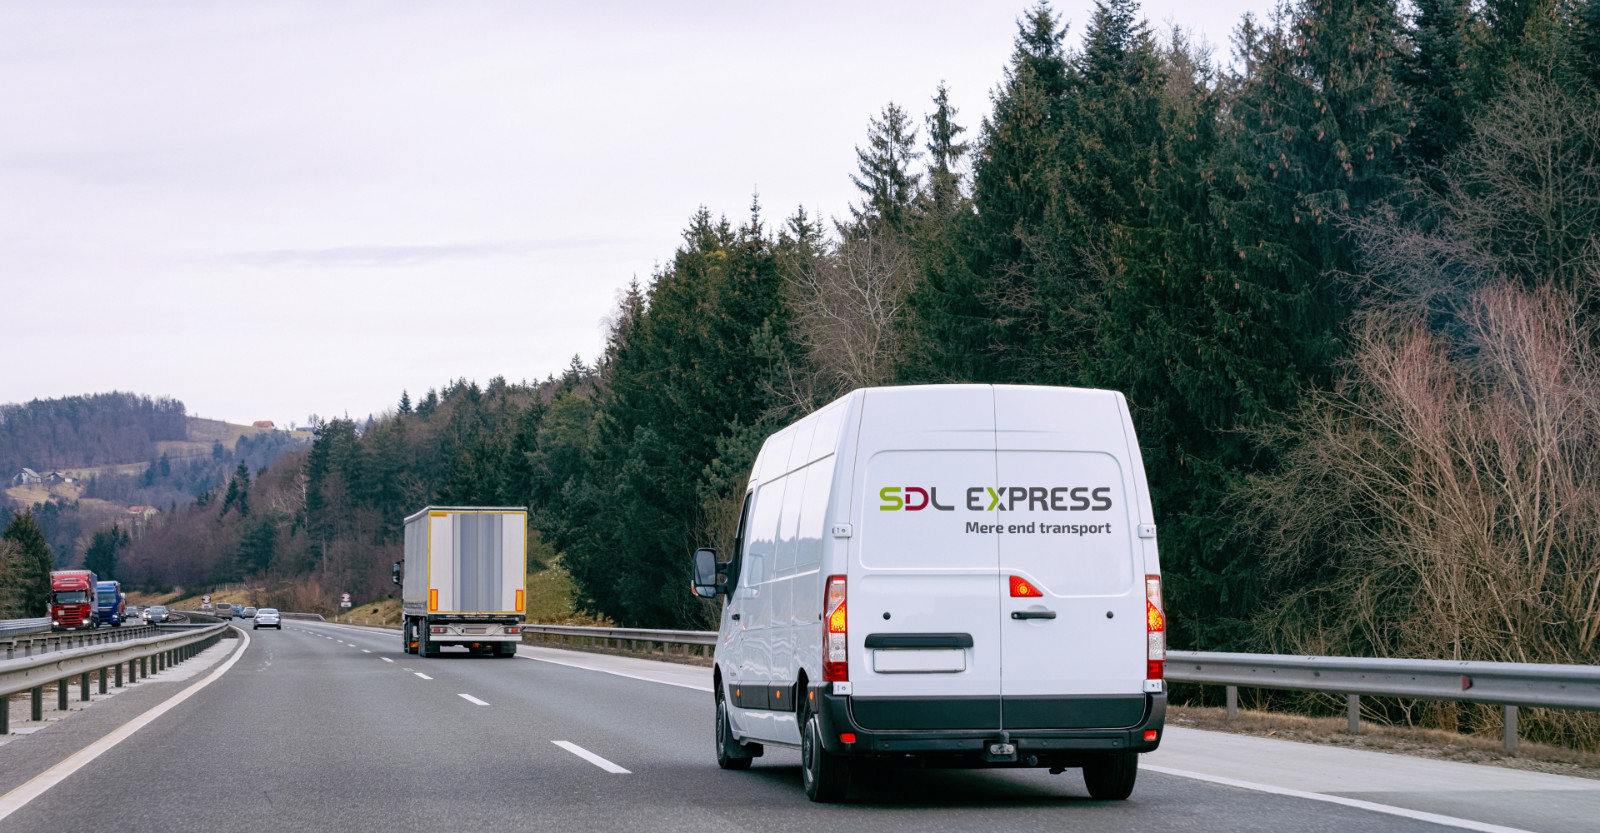 SDL Express